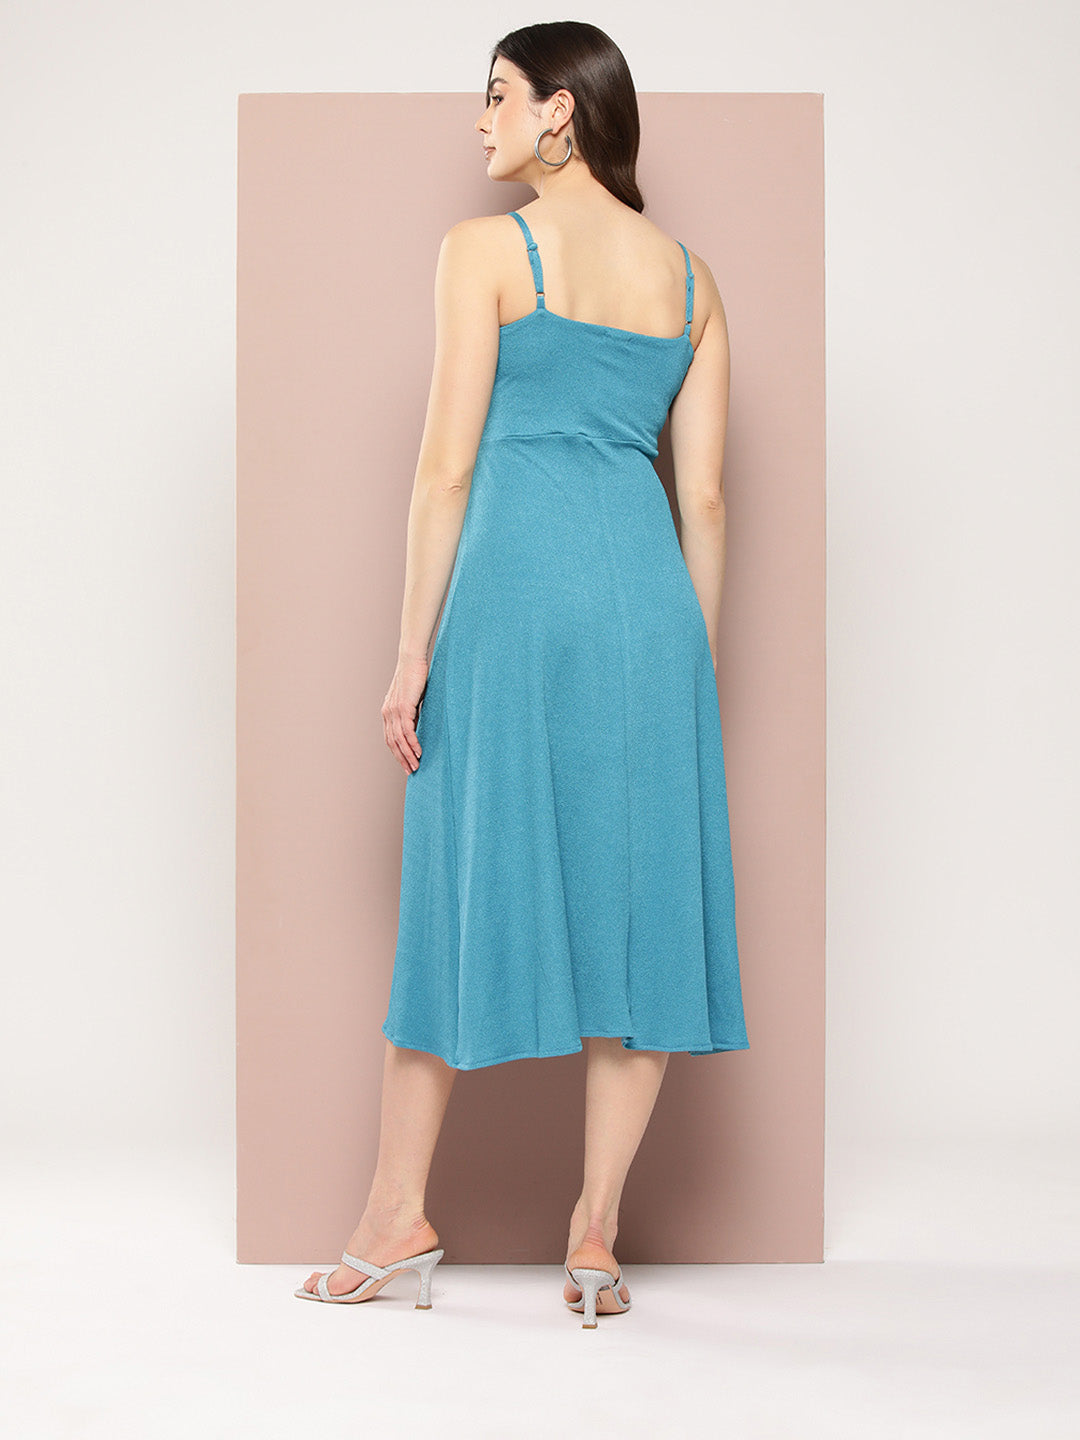 Stylish Sky blue midi dress.